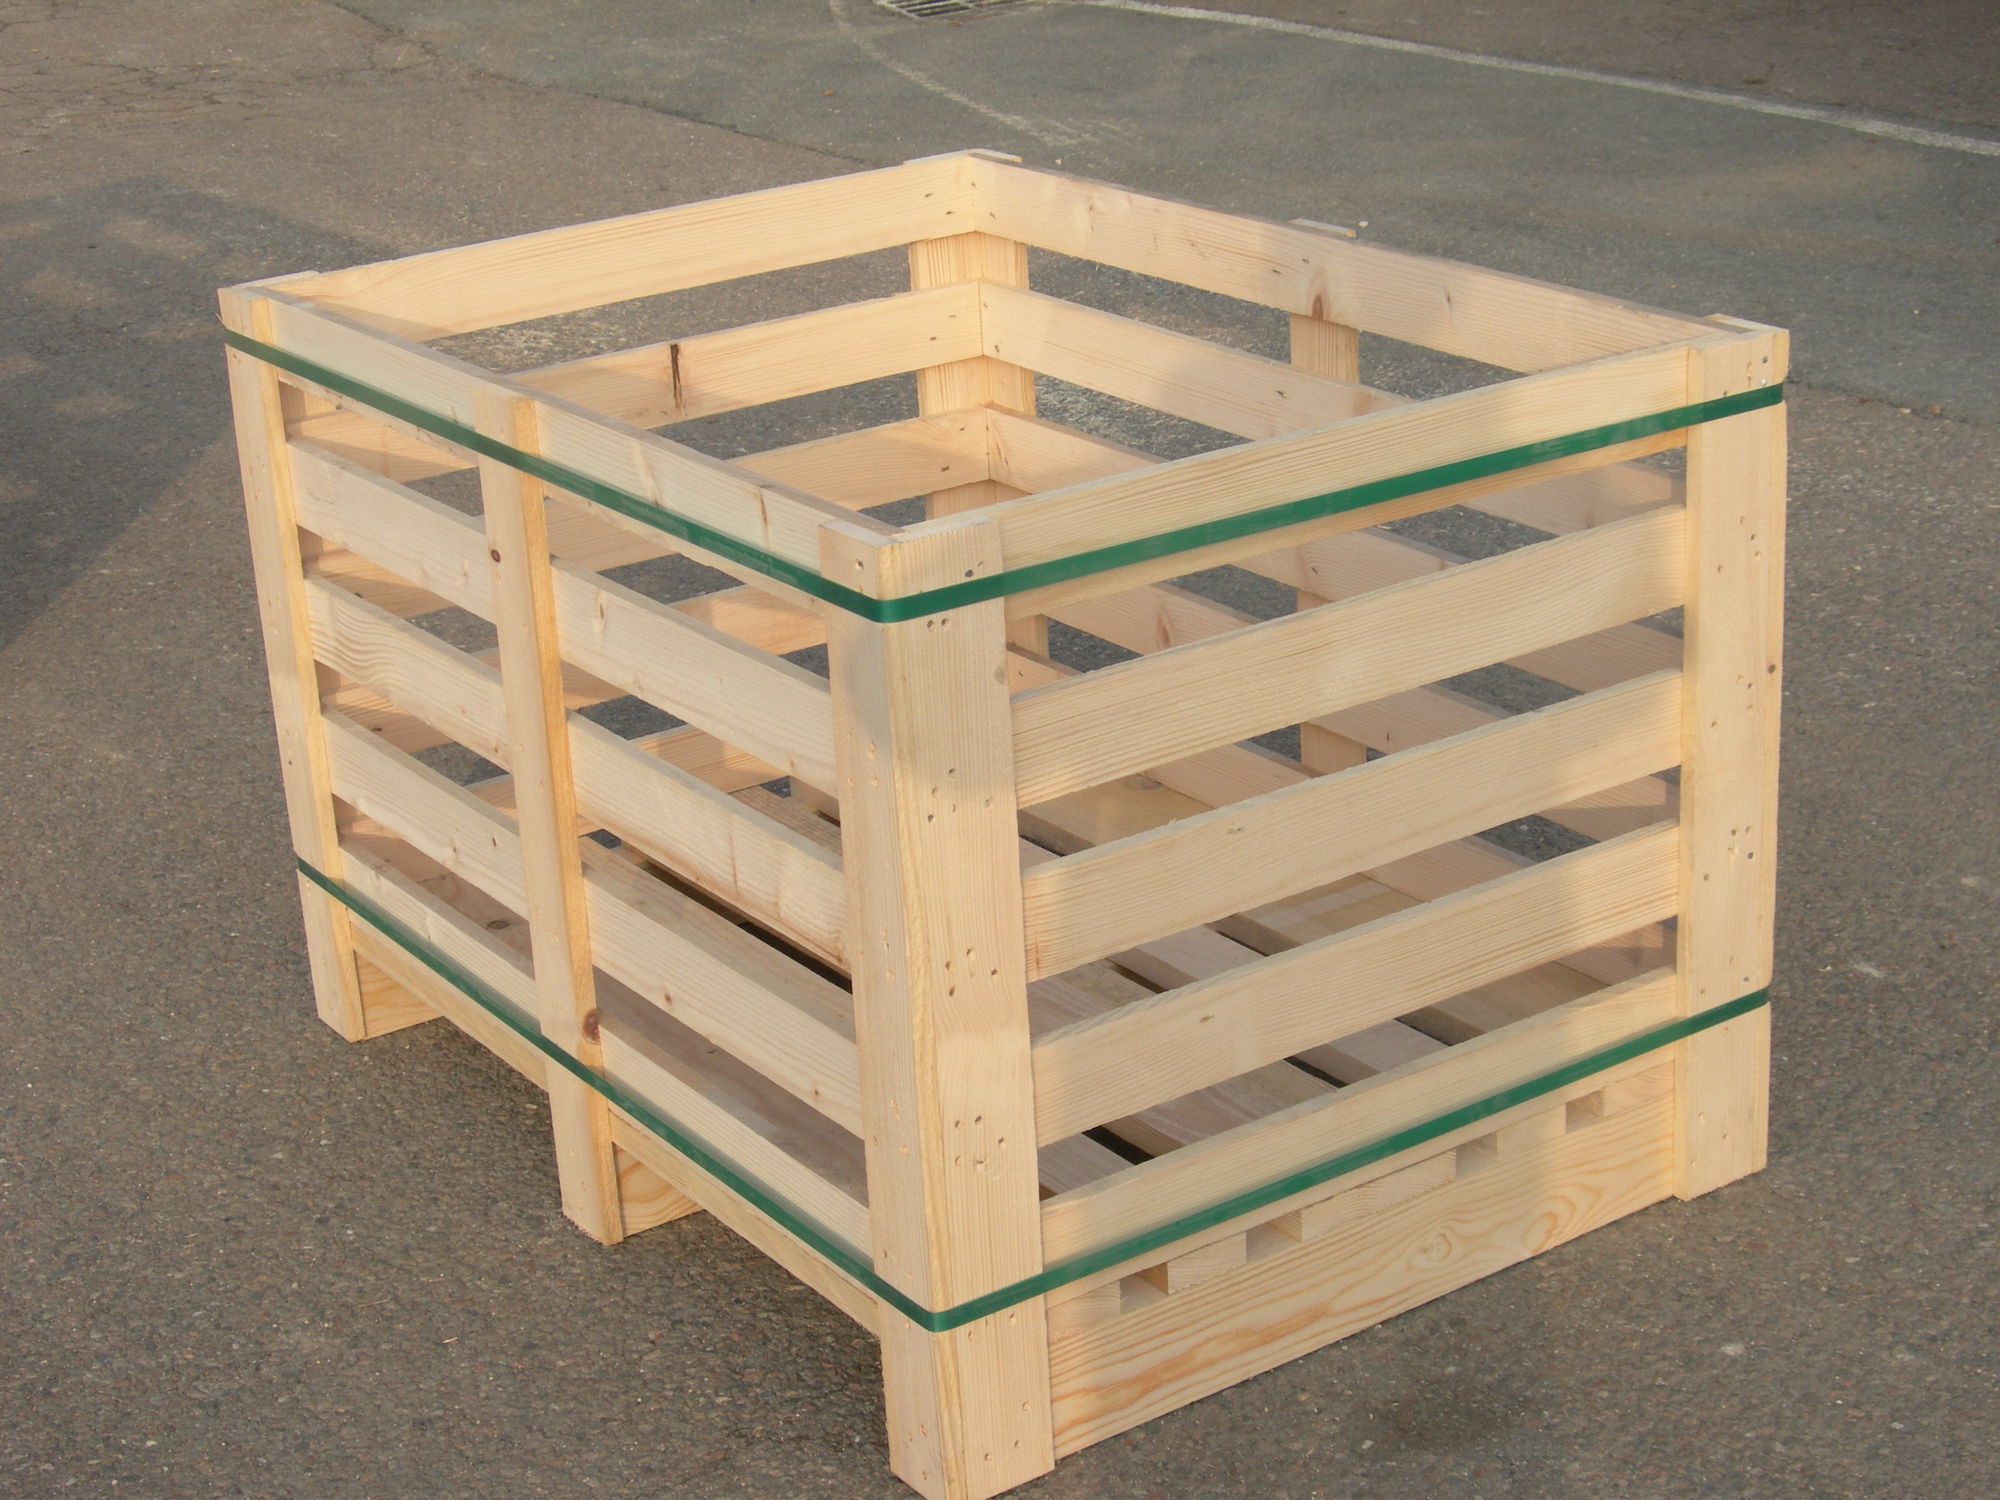 Wood & pallet box